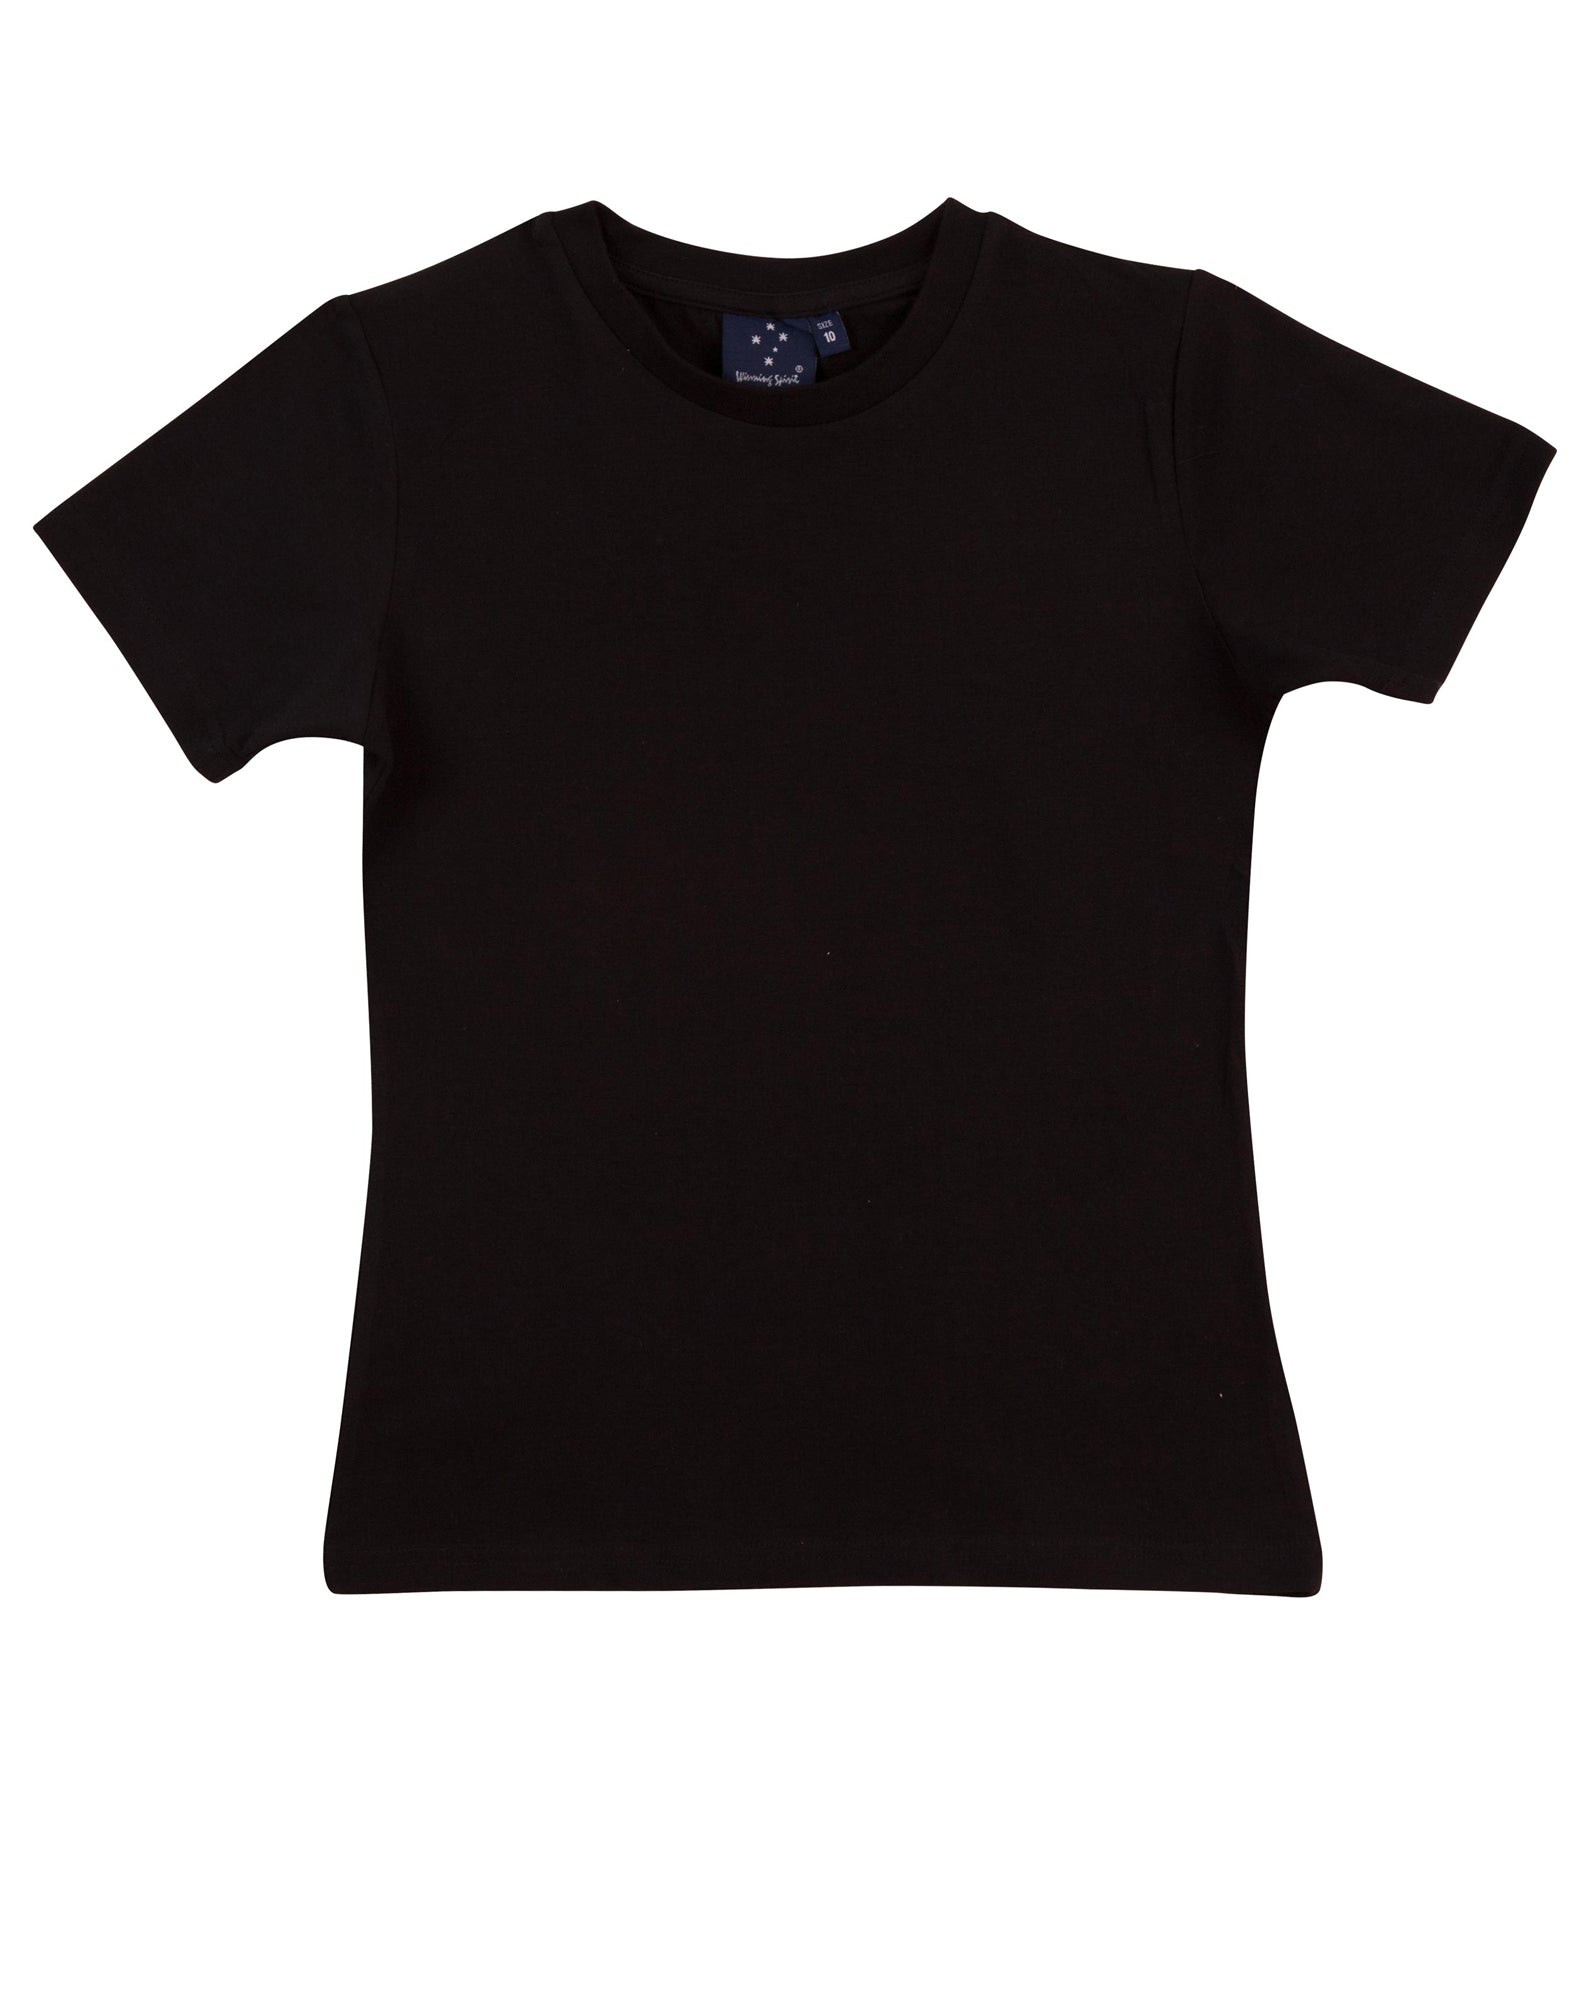 Superfit Tee Shirt Ladies [TS15 - Black]